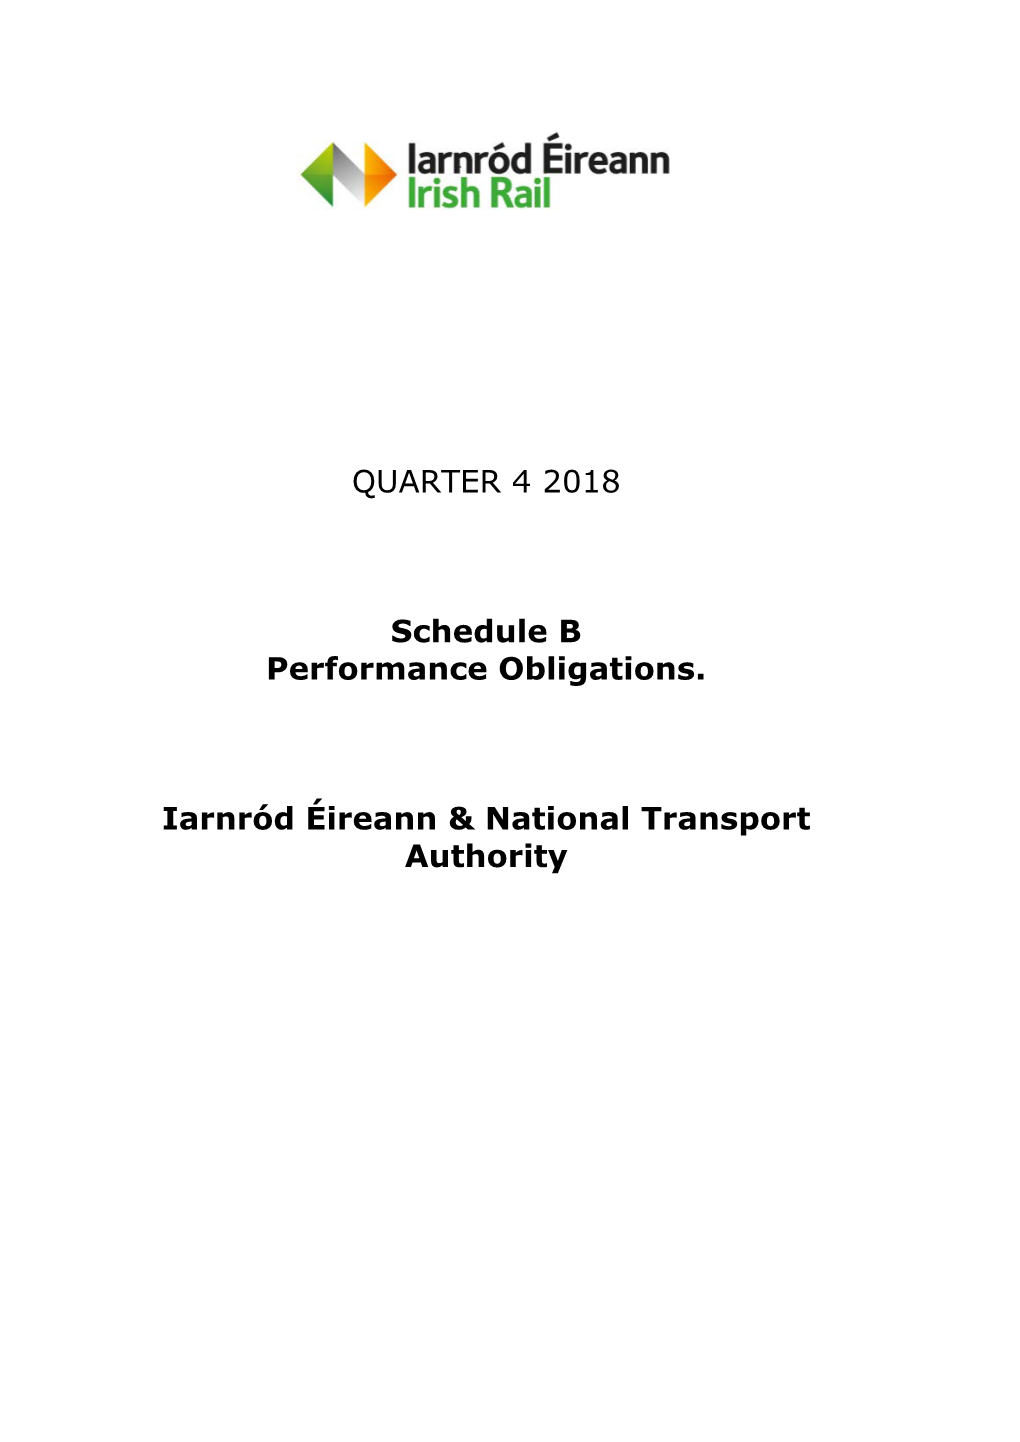 Q4 2018 Iarnród Éireann Performance Report